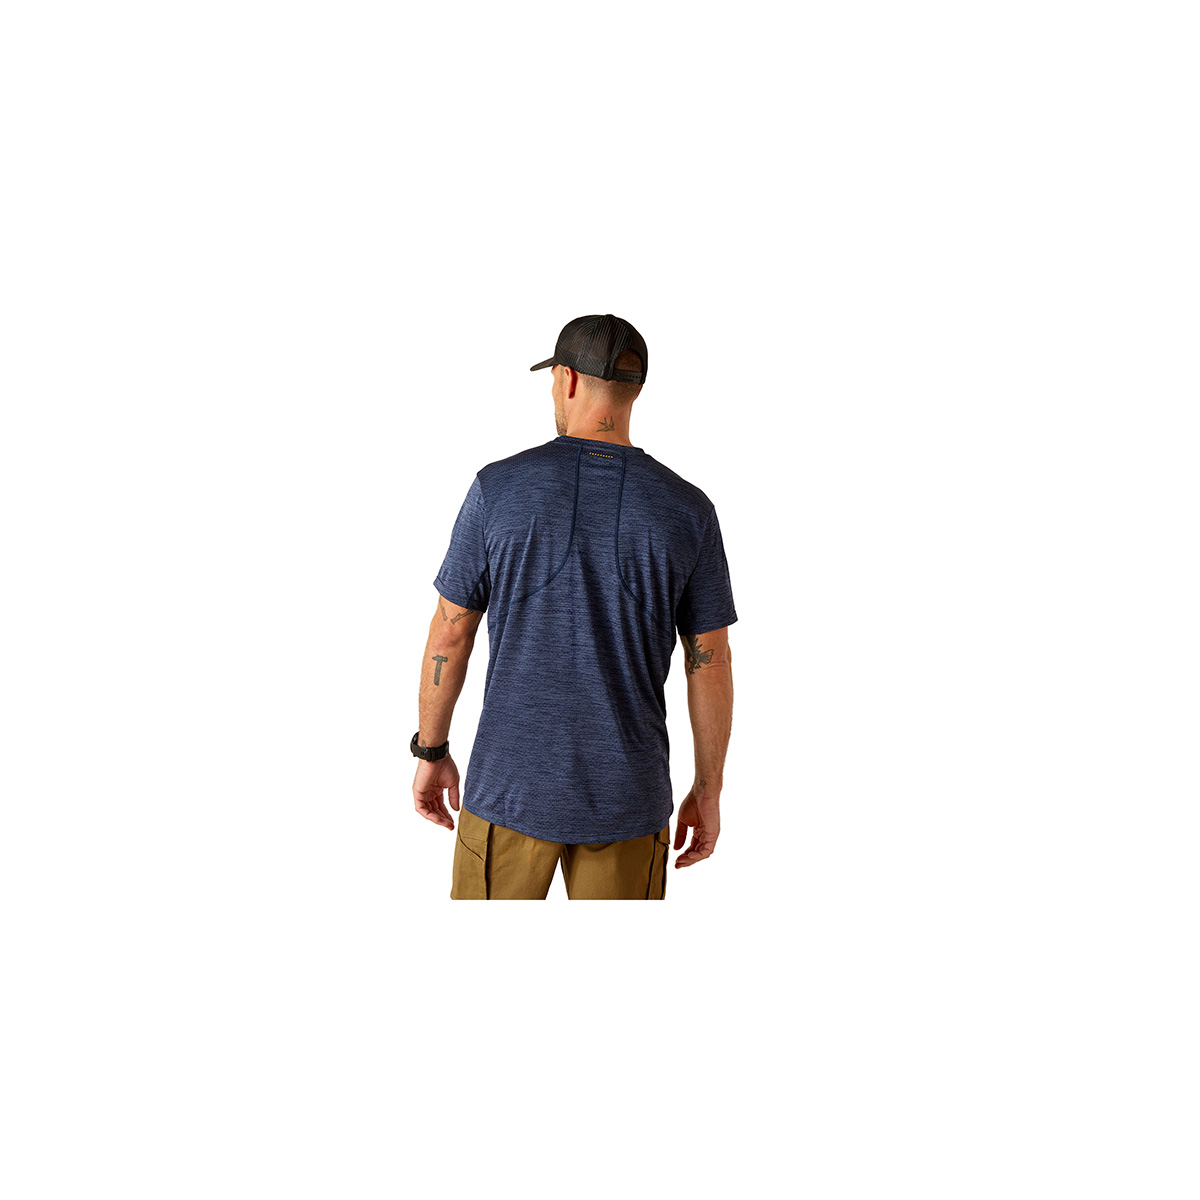 Ariat Men's Rebar Evolution Athletic Fit Short Sleeve T-Shirt-Navy